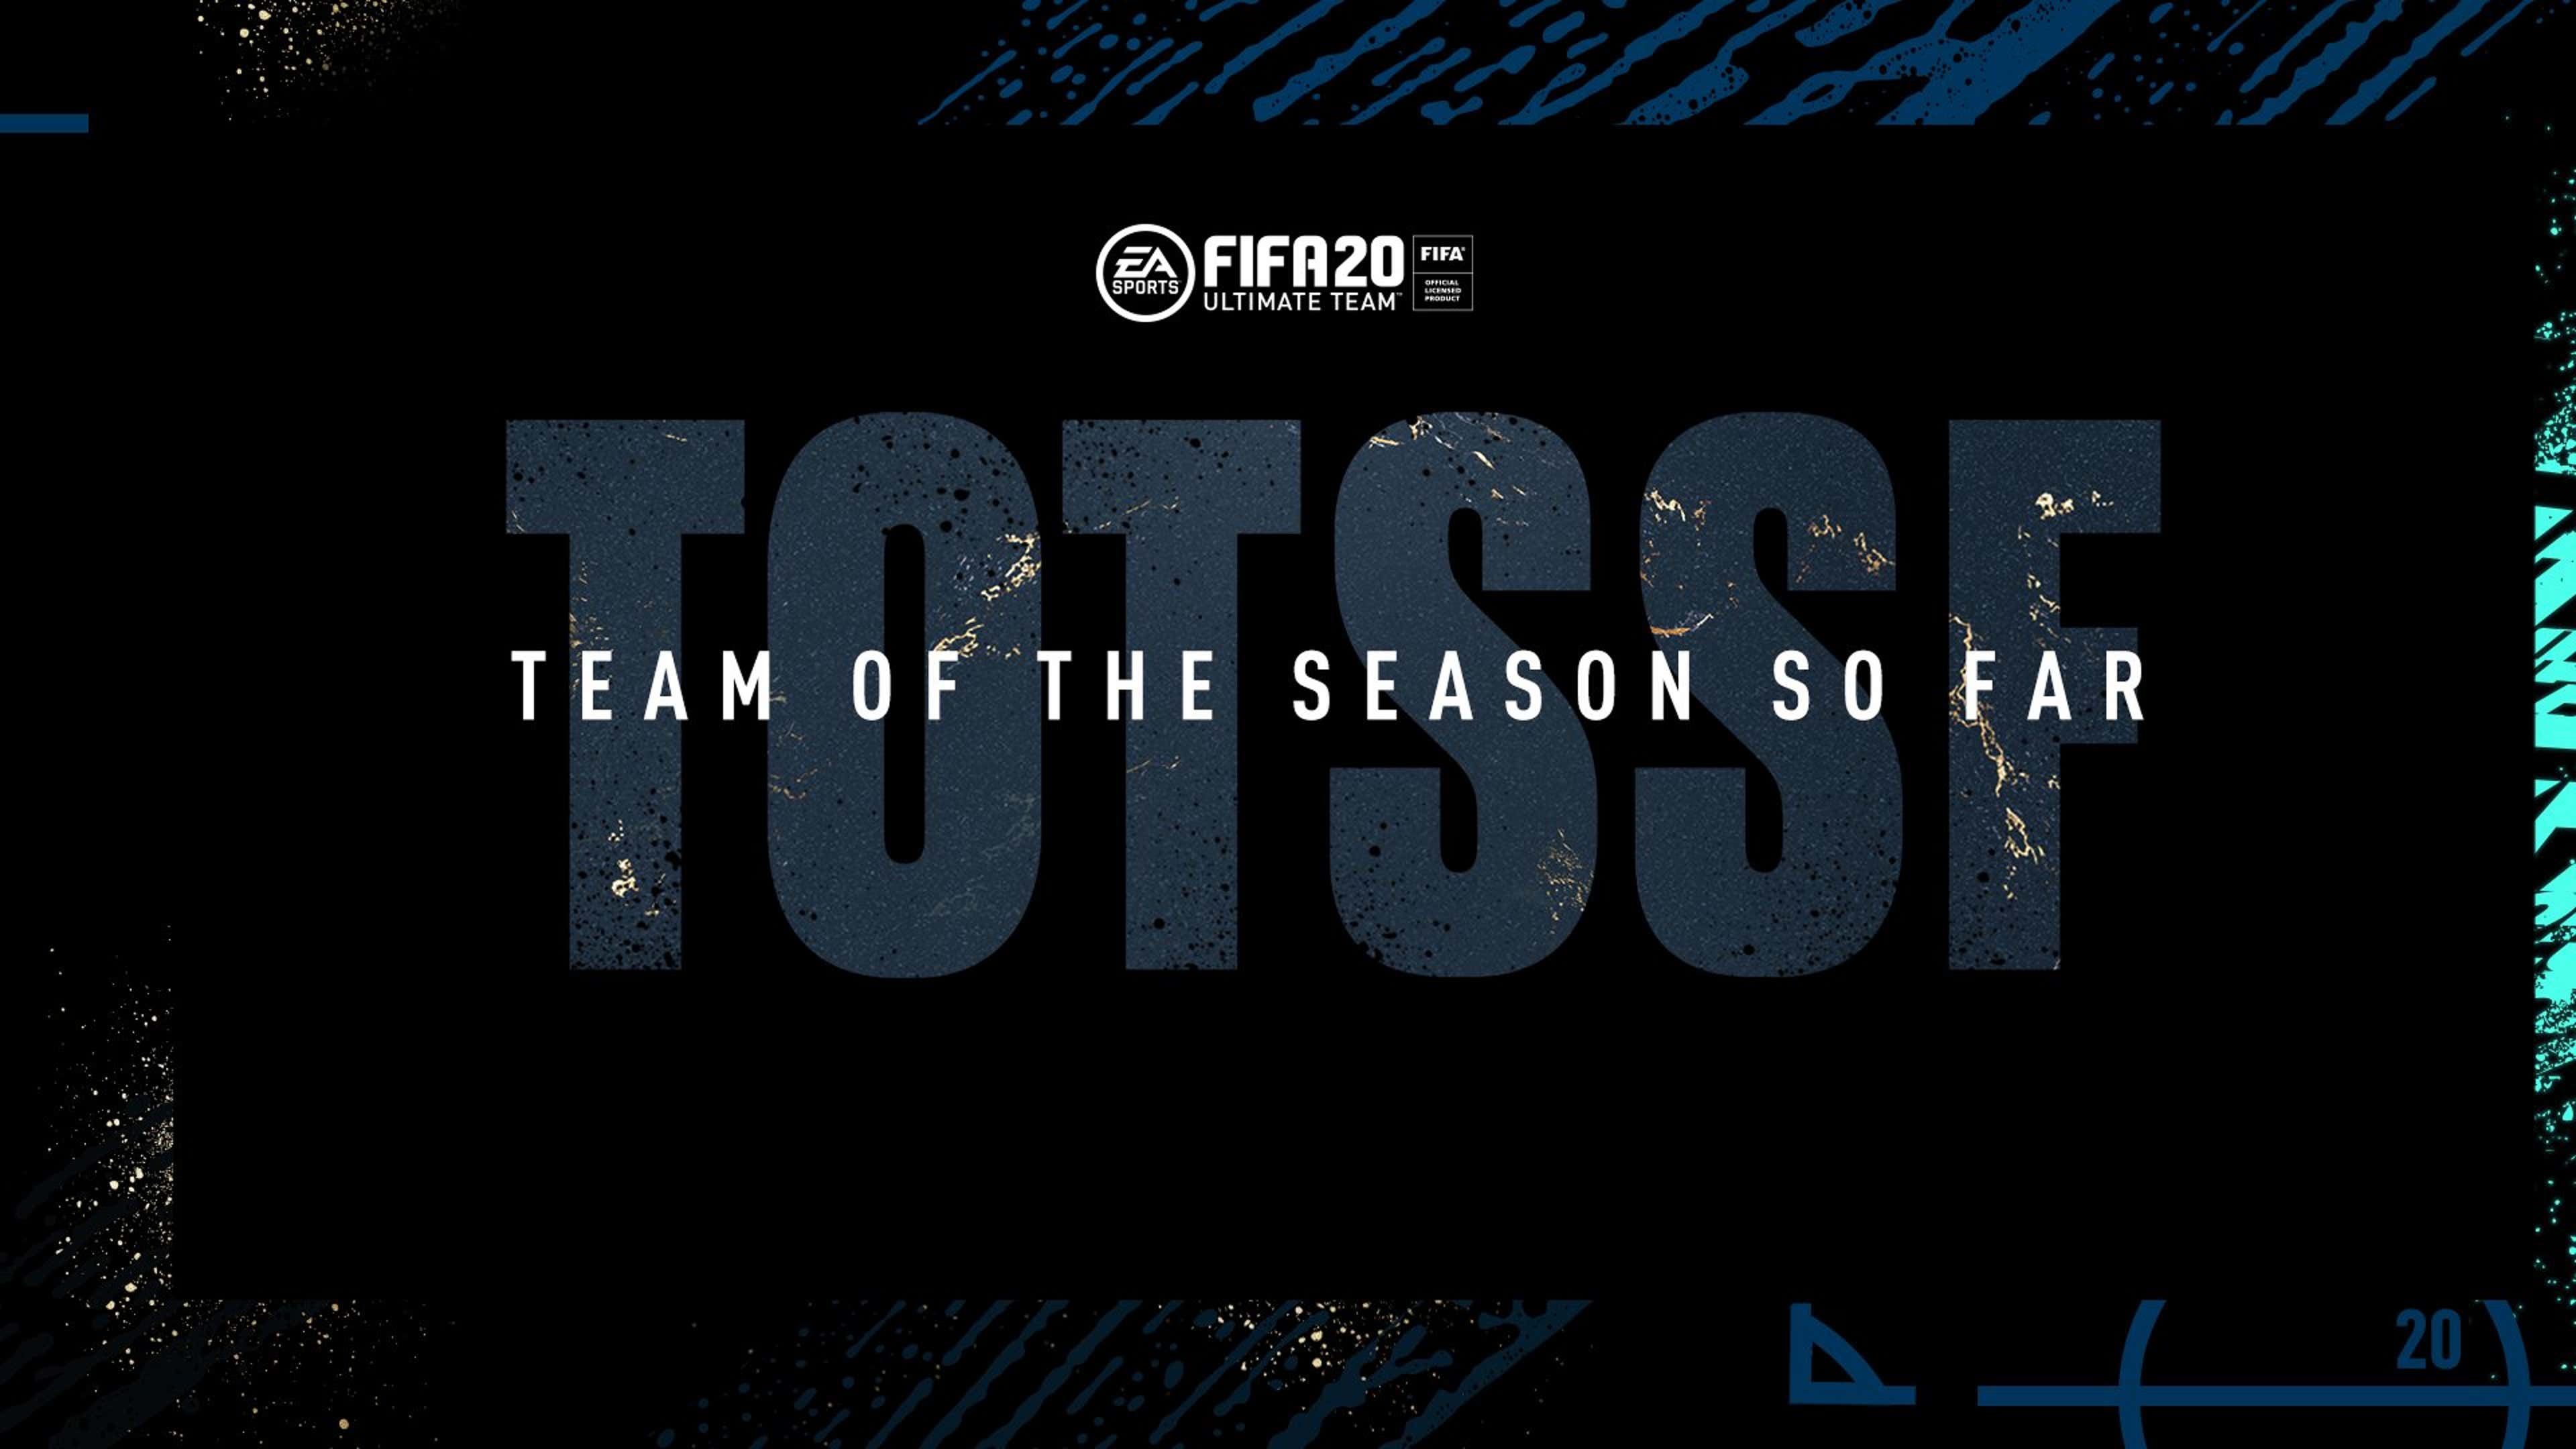 TOTSSF Team of the Season so far FIFA 20 Ultimate Team